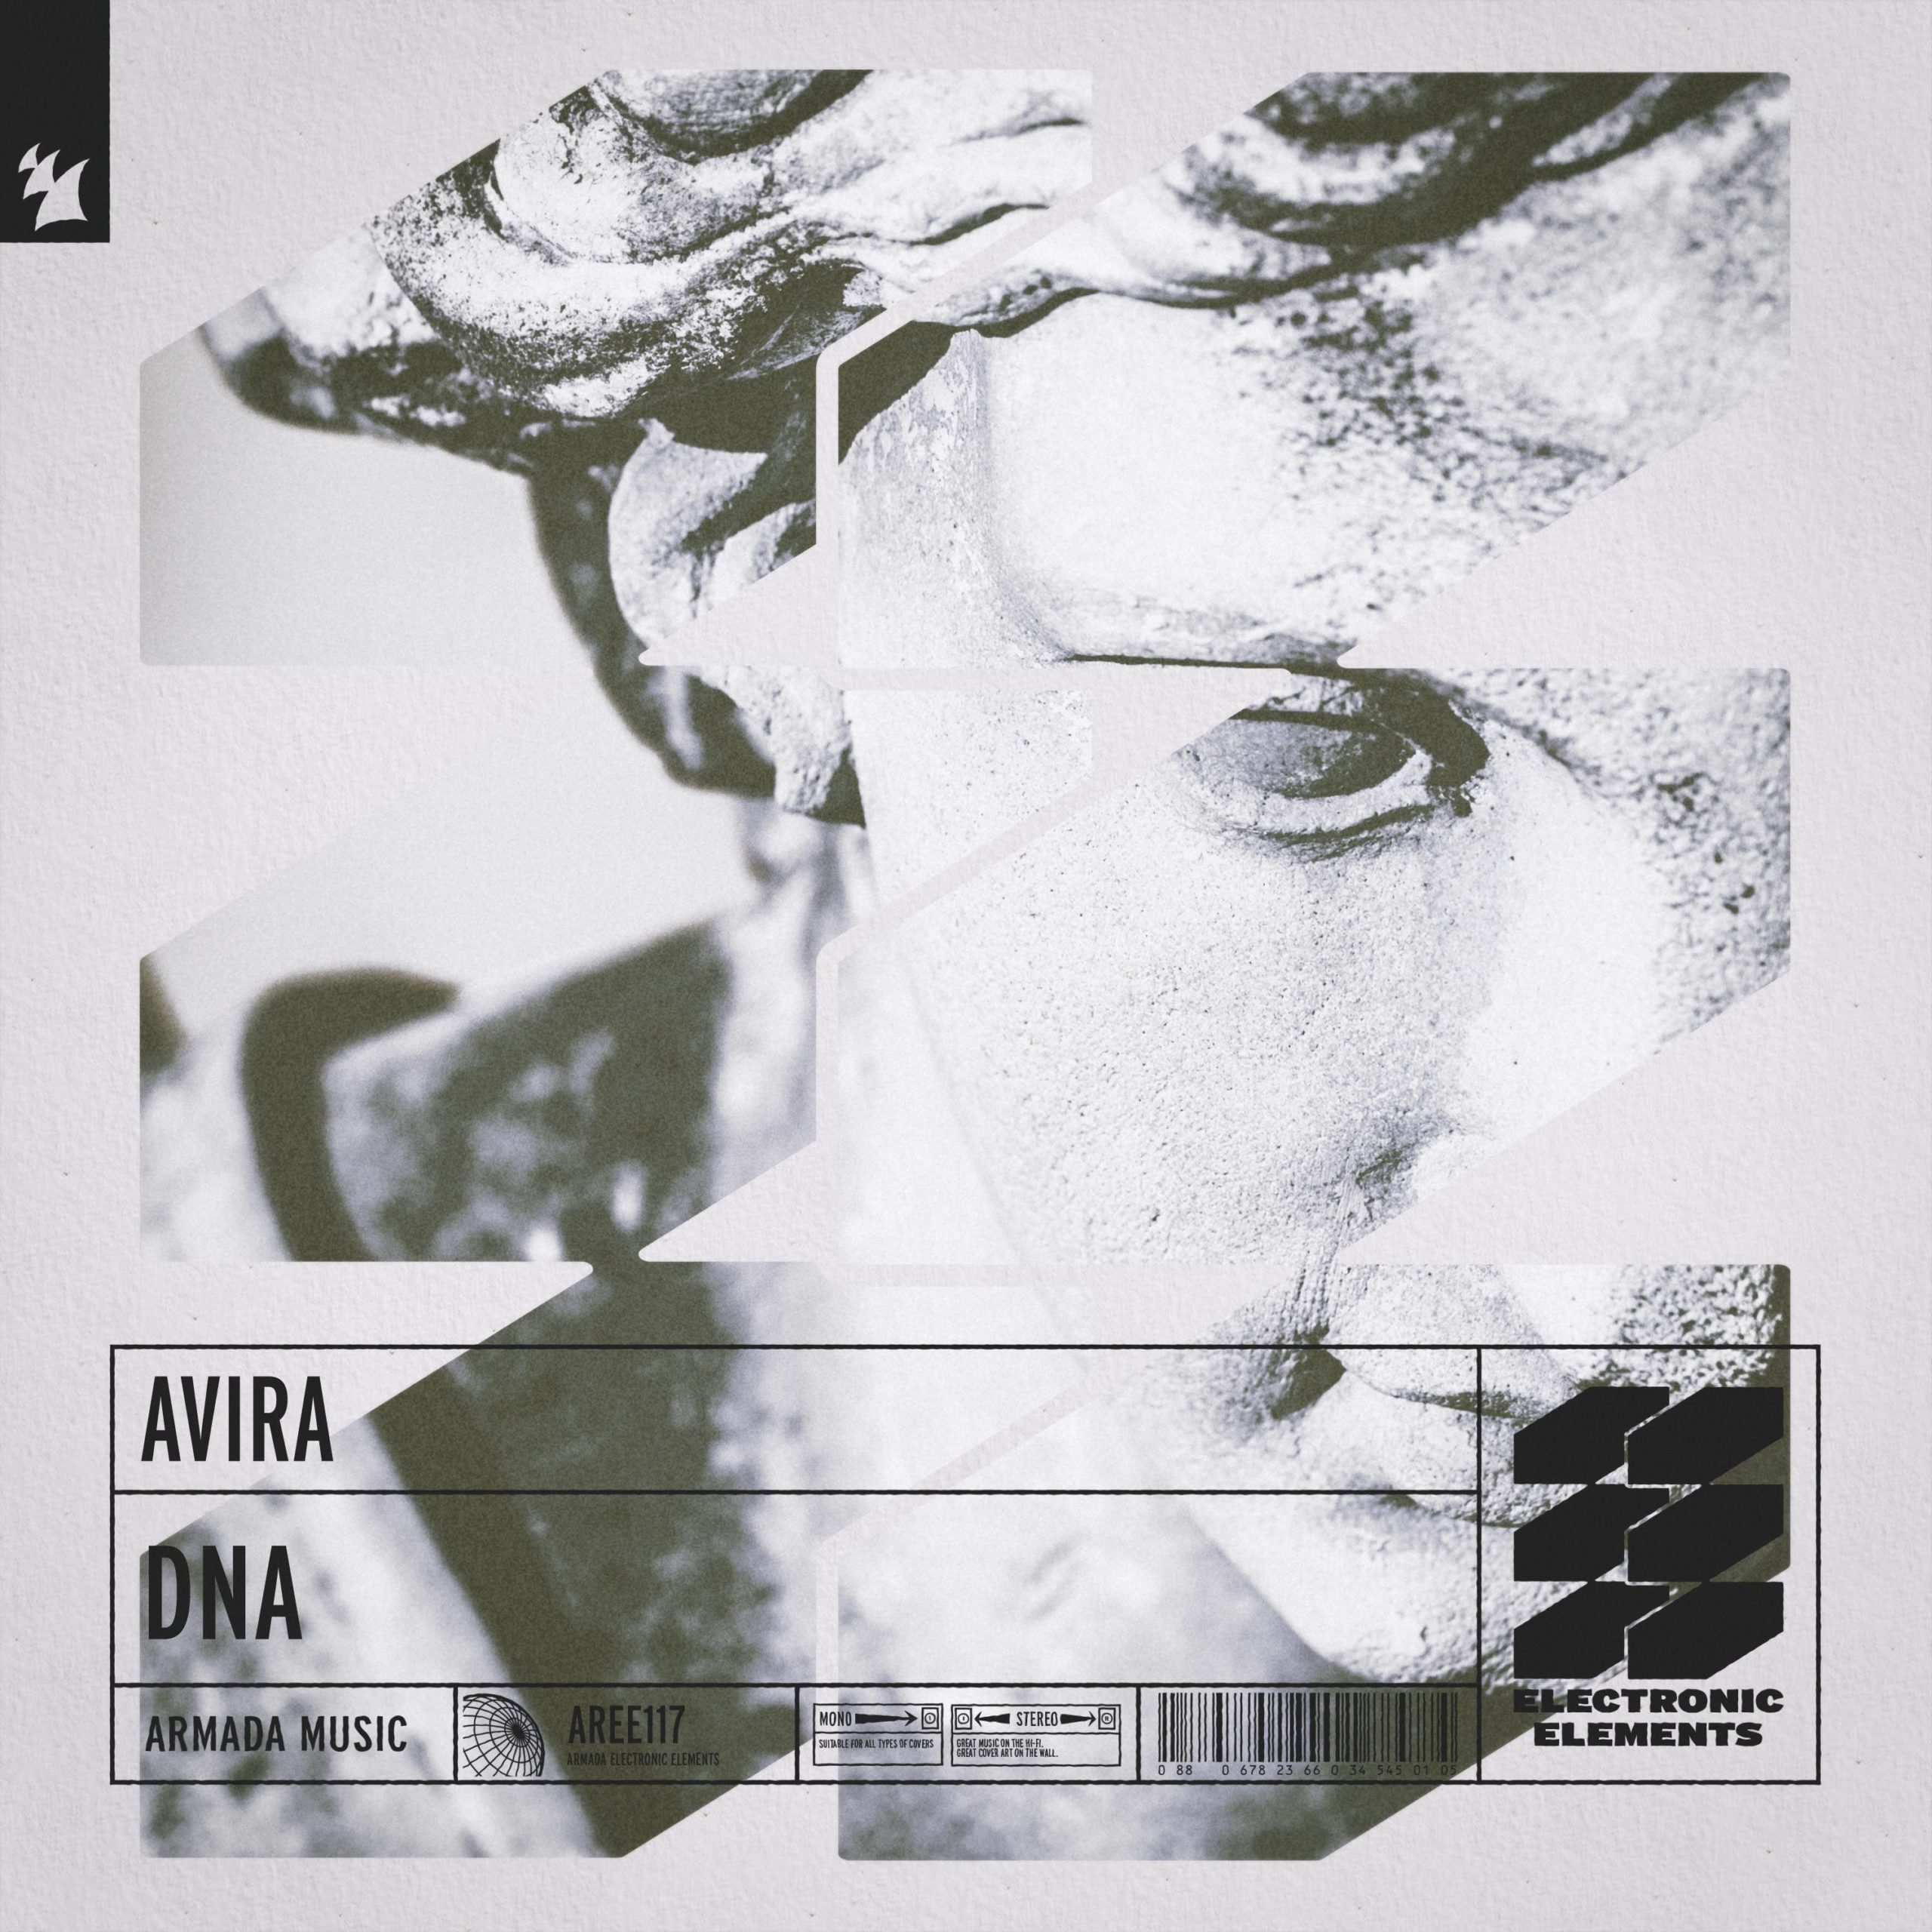 AVIRA presents DNA on Electronic Elements / Armada Music